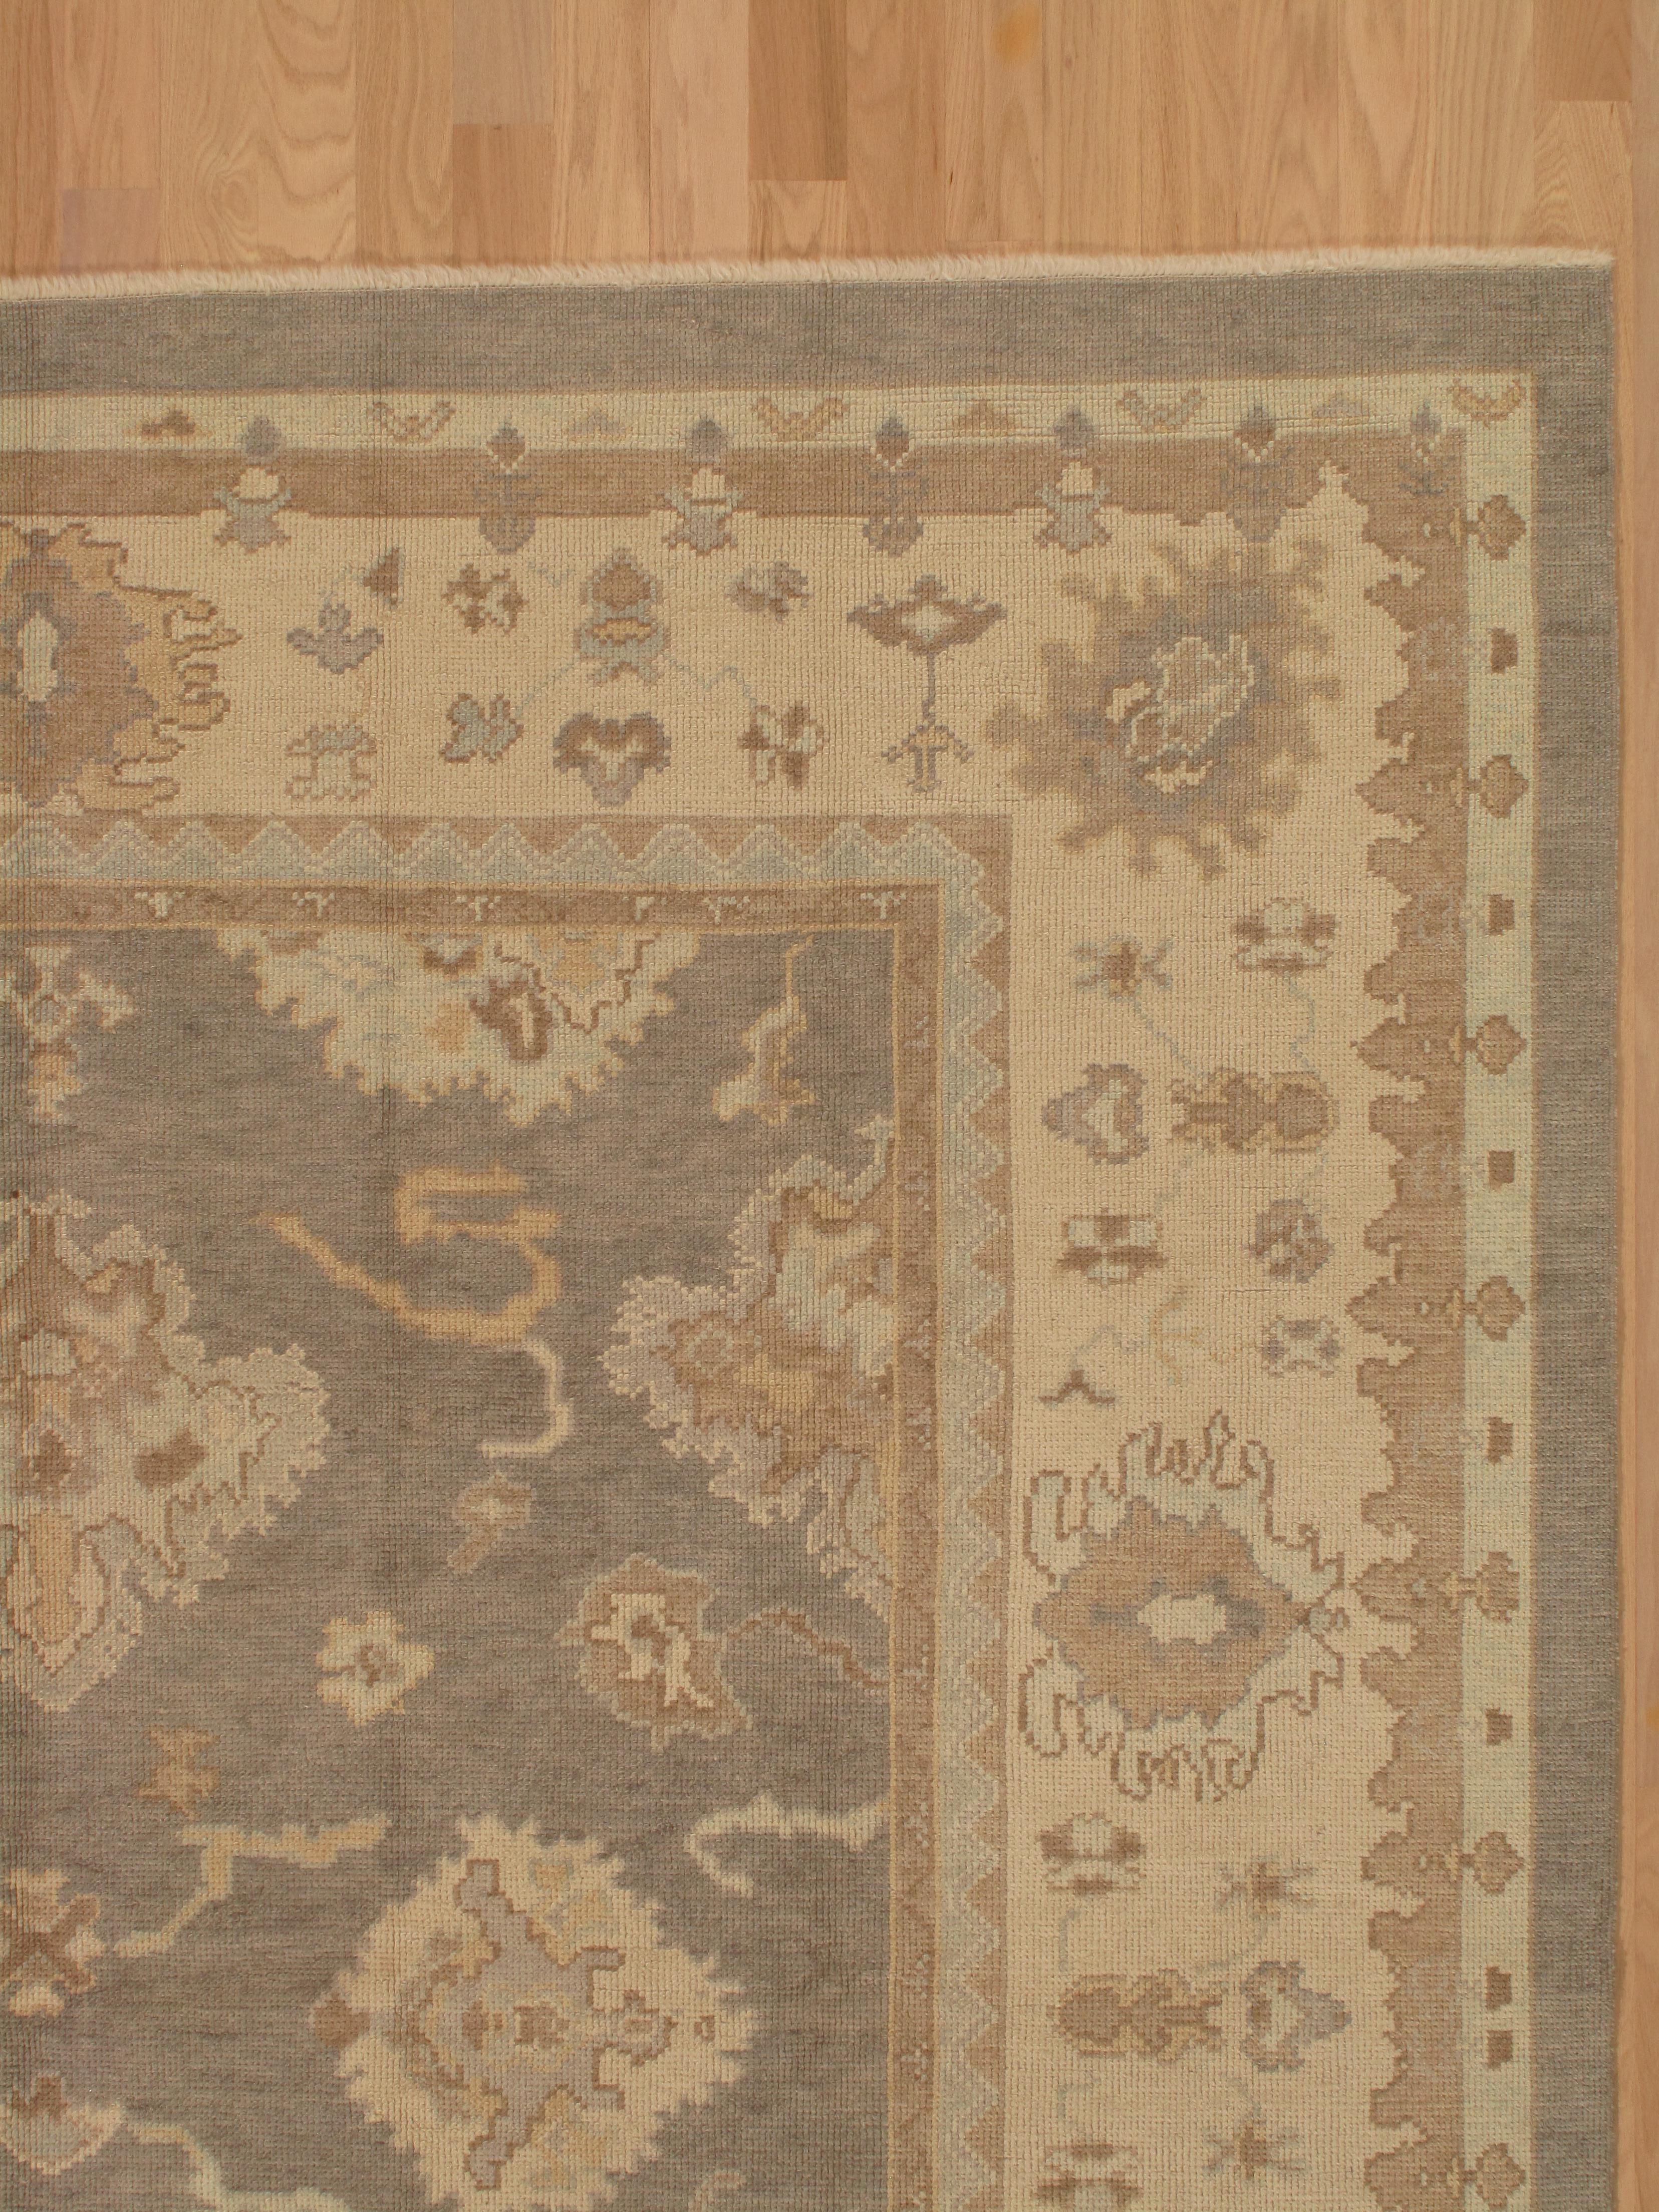 Vintage Oushak Carpet, Oriental Rug, Handmade Grey, Ivory, Saffron In Excellent Condition For Sale In Port Washington, NY